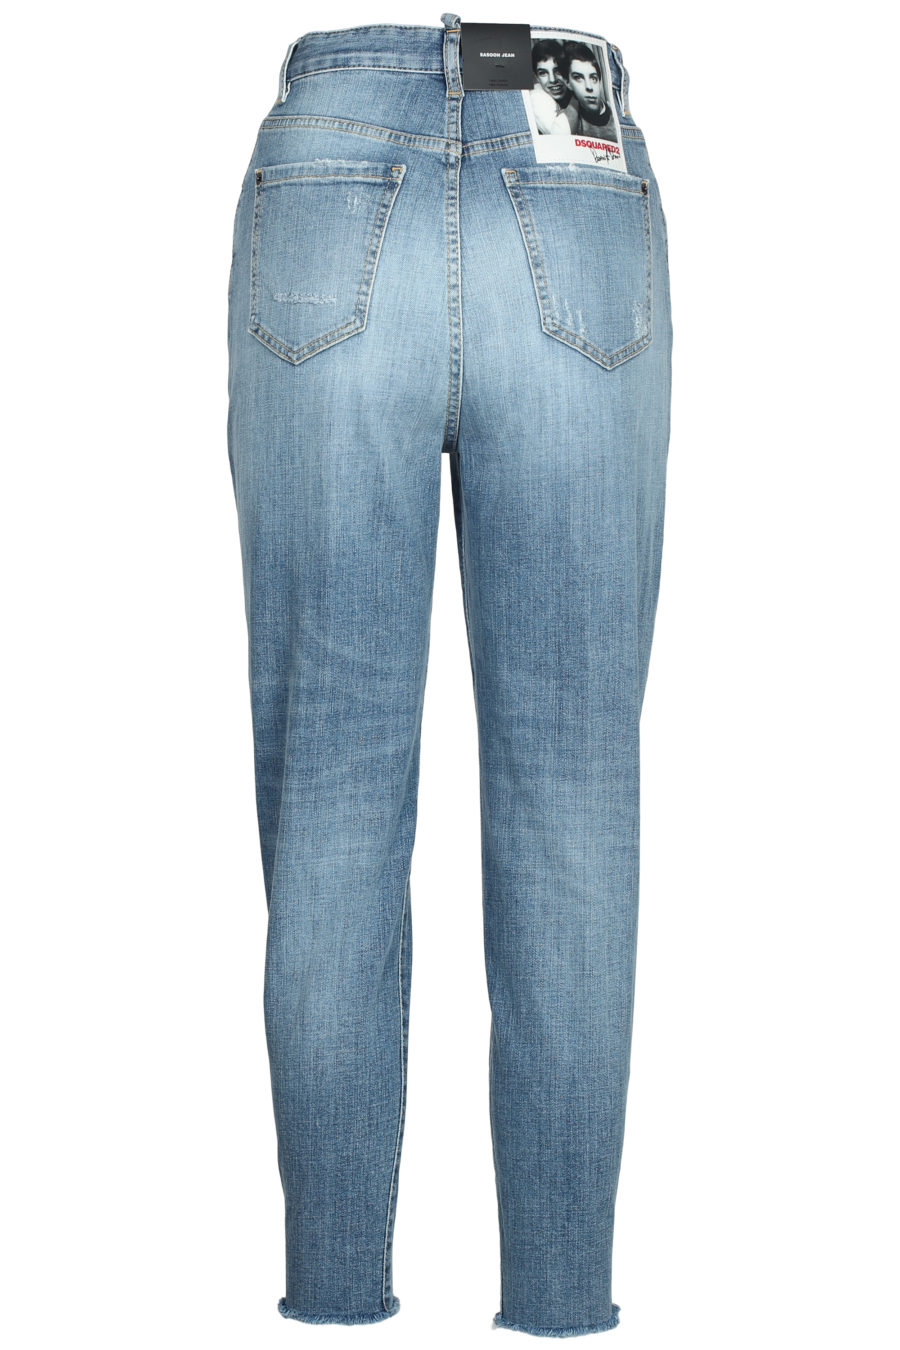 Pantalón tejano azul claro "Sasoon jean" - IMG 5618